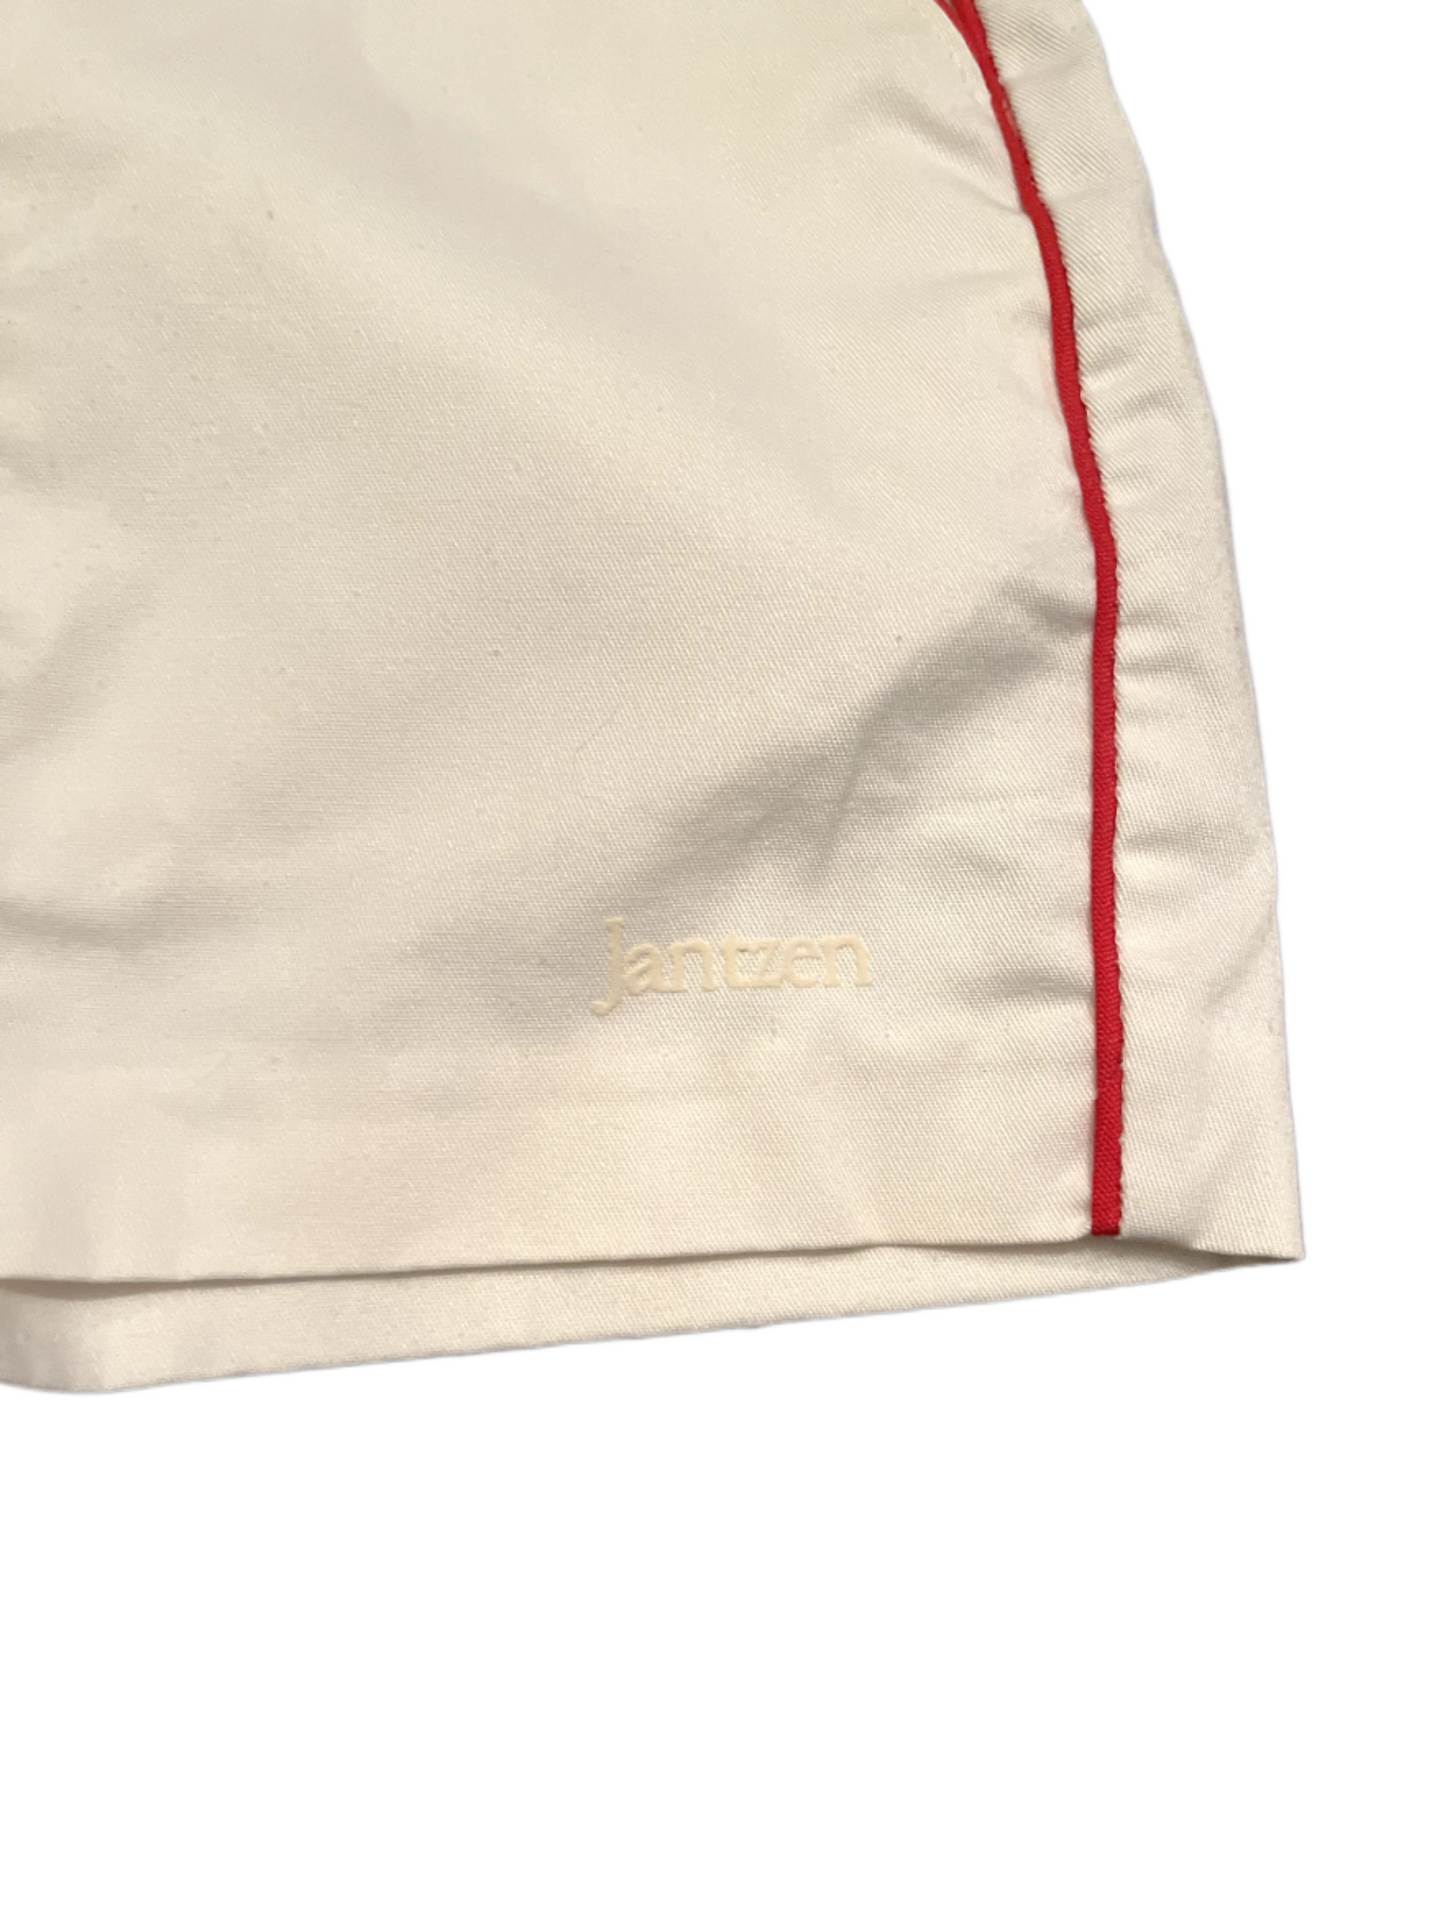 Jantzen logo on front of white shorts with red stripe on white background.